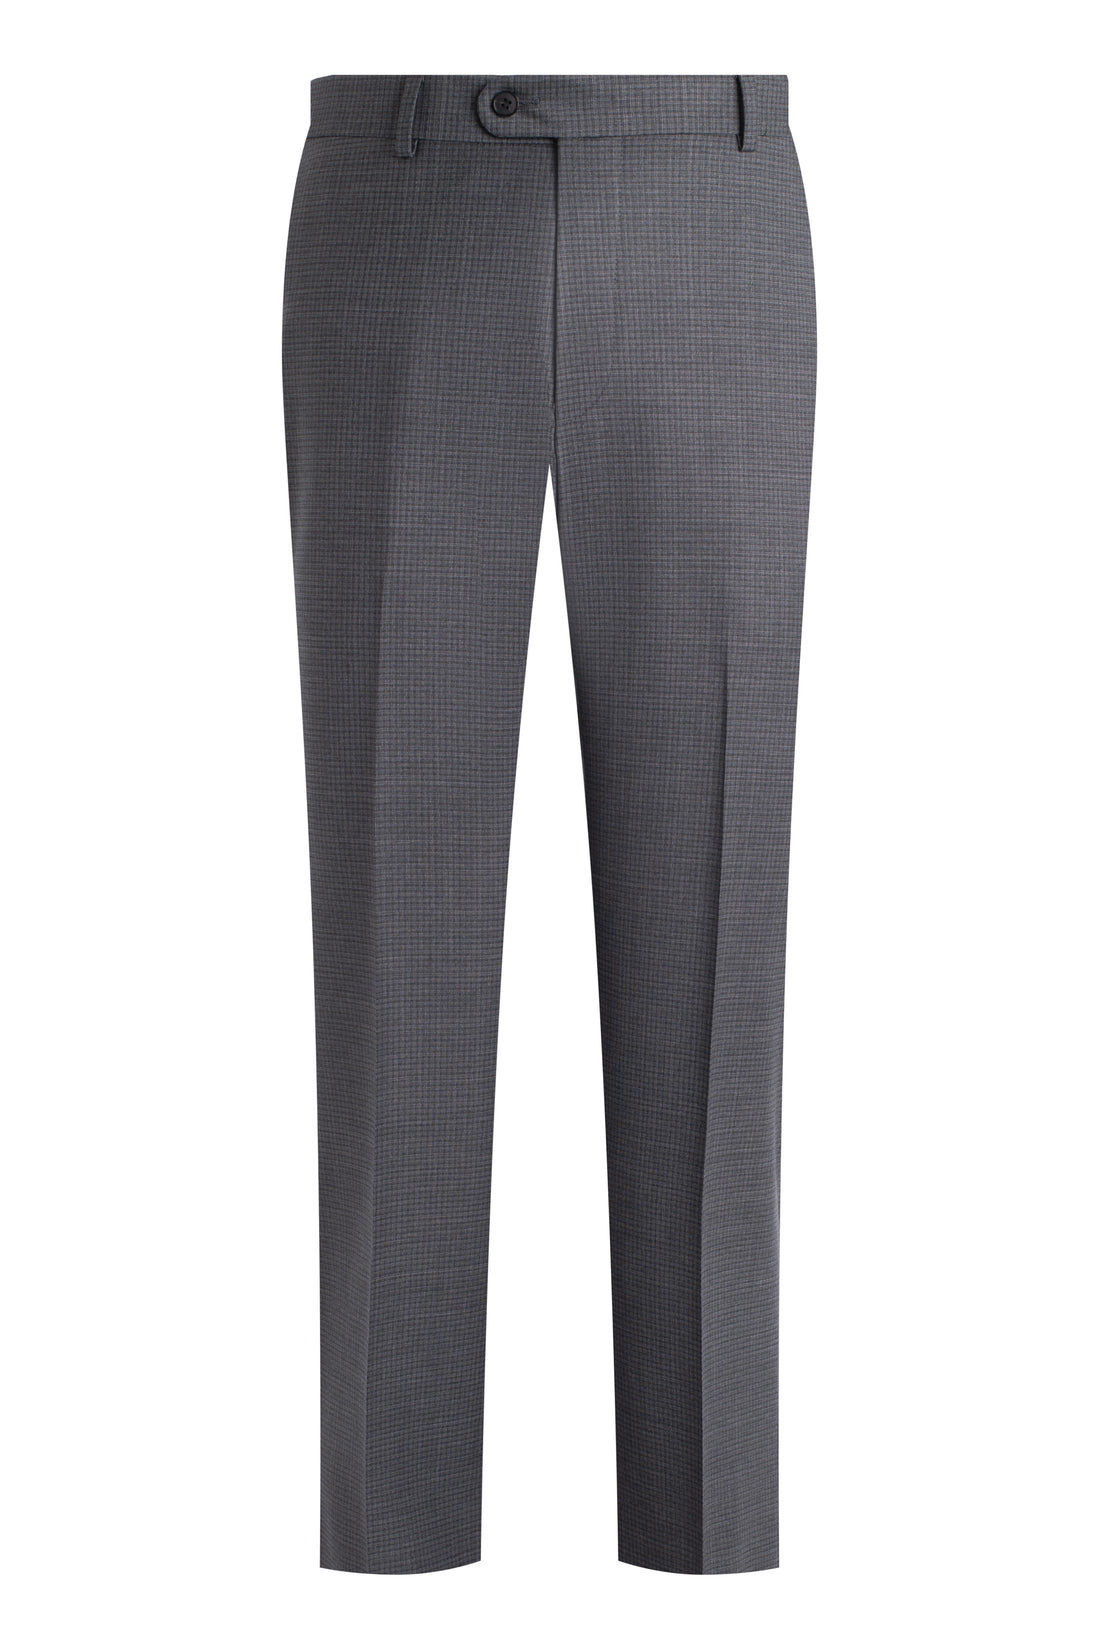 Grey Super 150s Micro Check Suit pant front